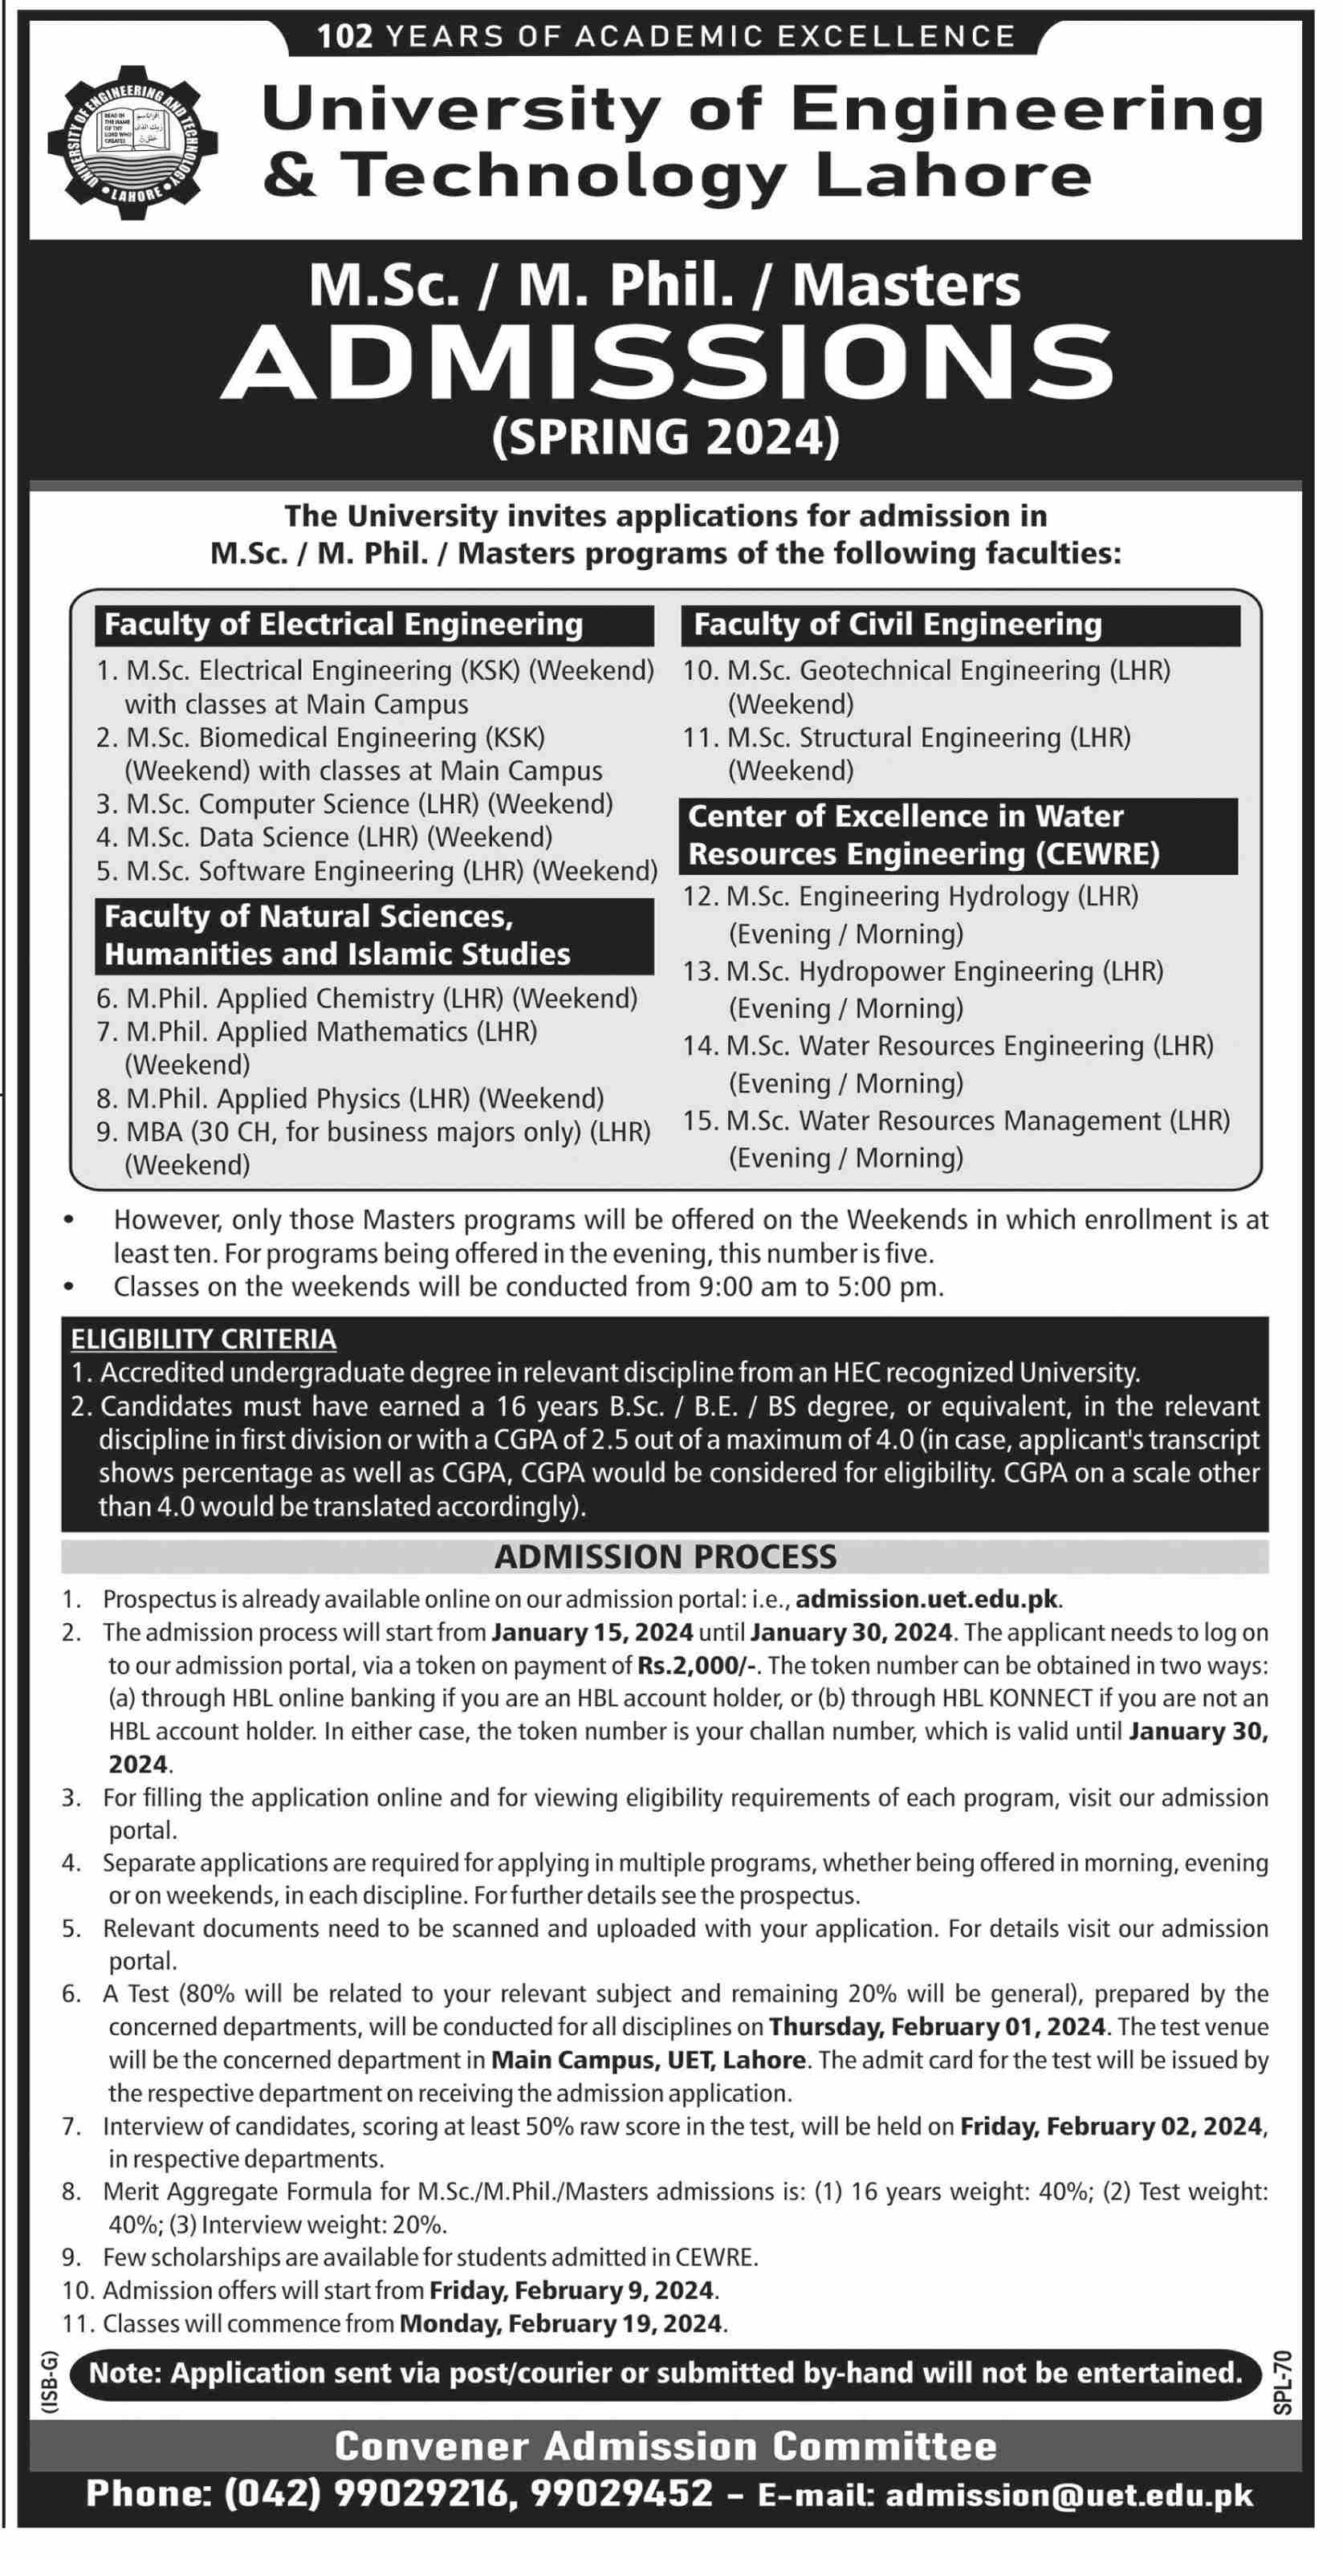 UET Lahore MSc MPhil Masters Admissions Spring 2024